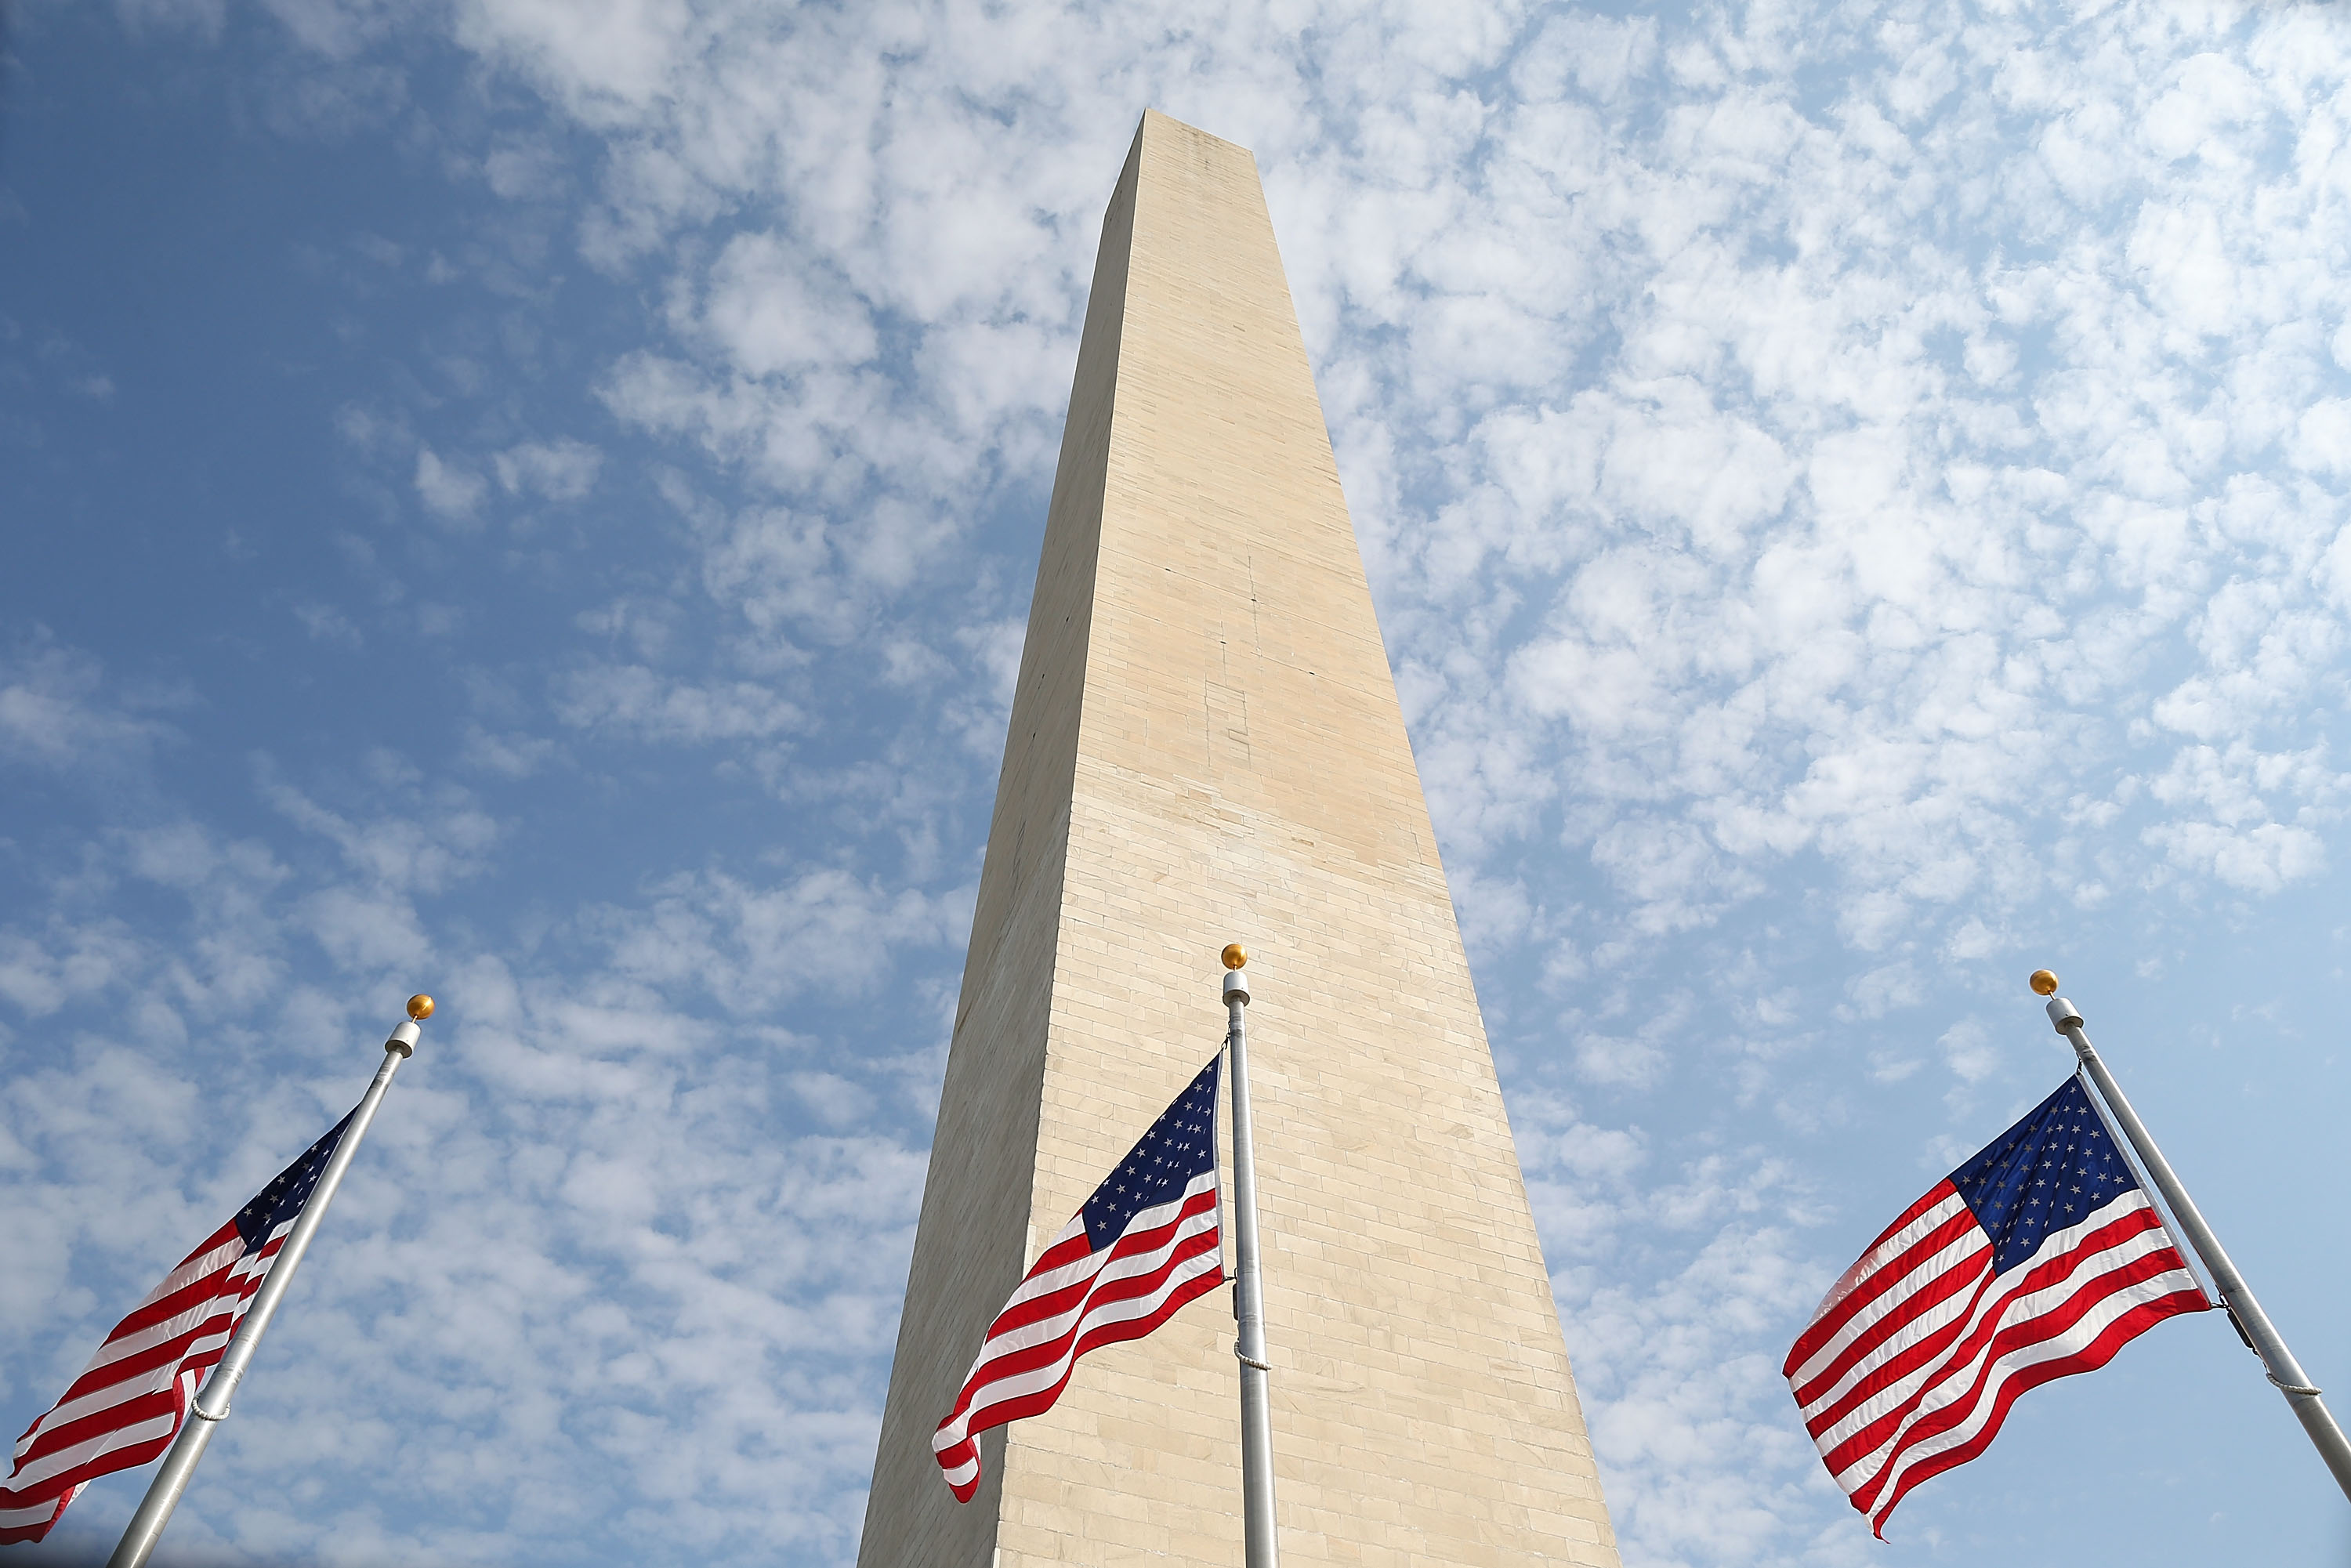 Washington Monument closed Thursday for elevator repairs